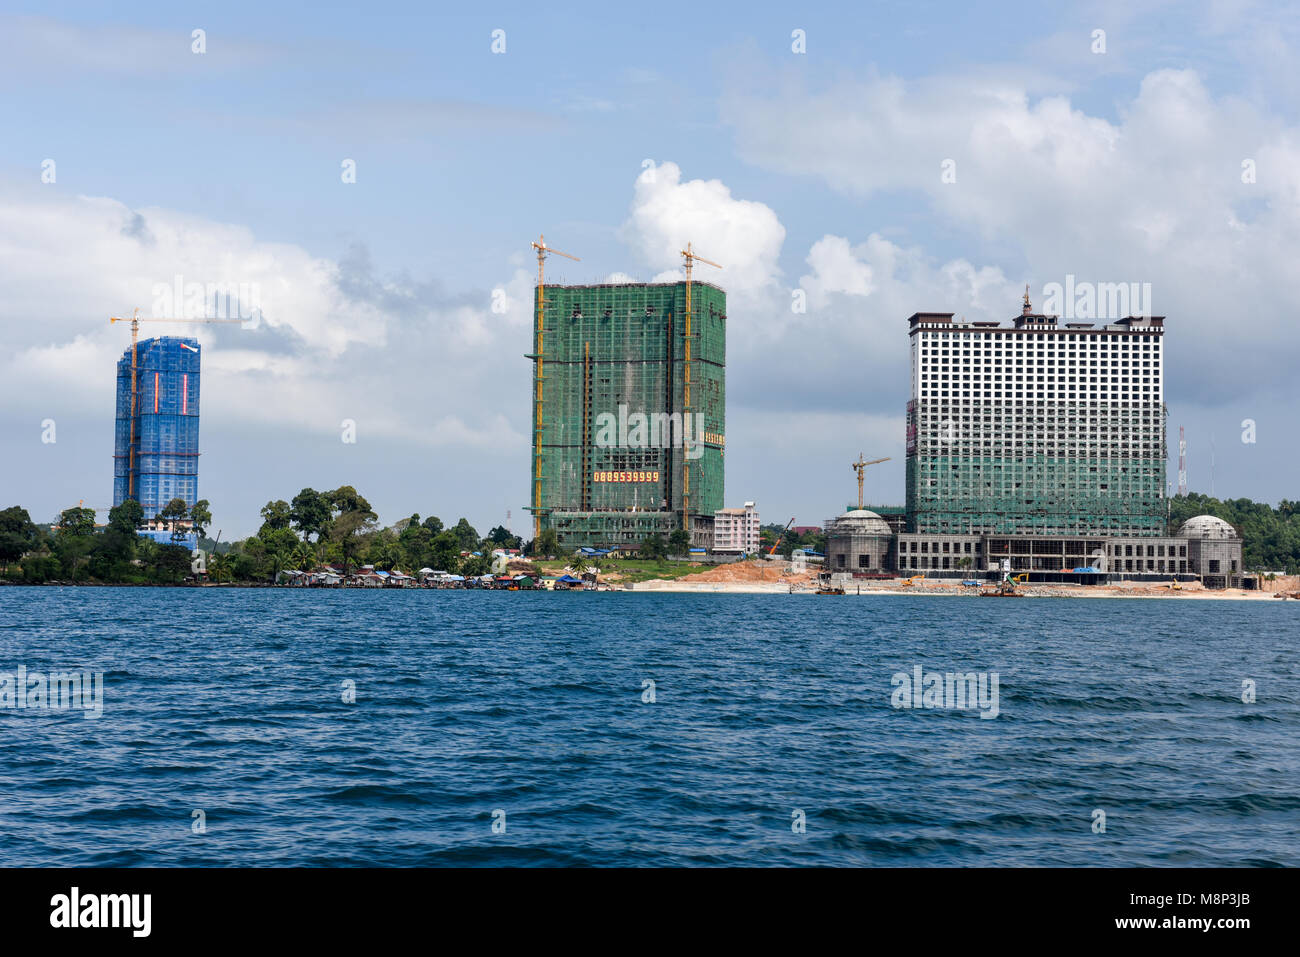 Sihanoukville, Cambodia - 25 January 2018: Modern high-rise buildings under construction at Sihanoukville on Cambodia Stock Photo